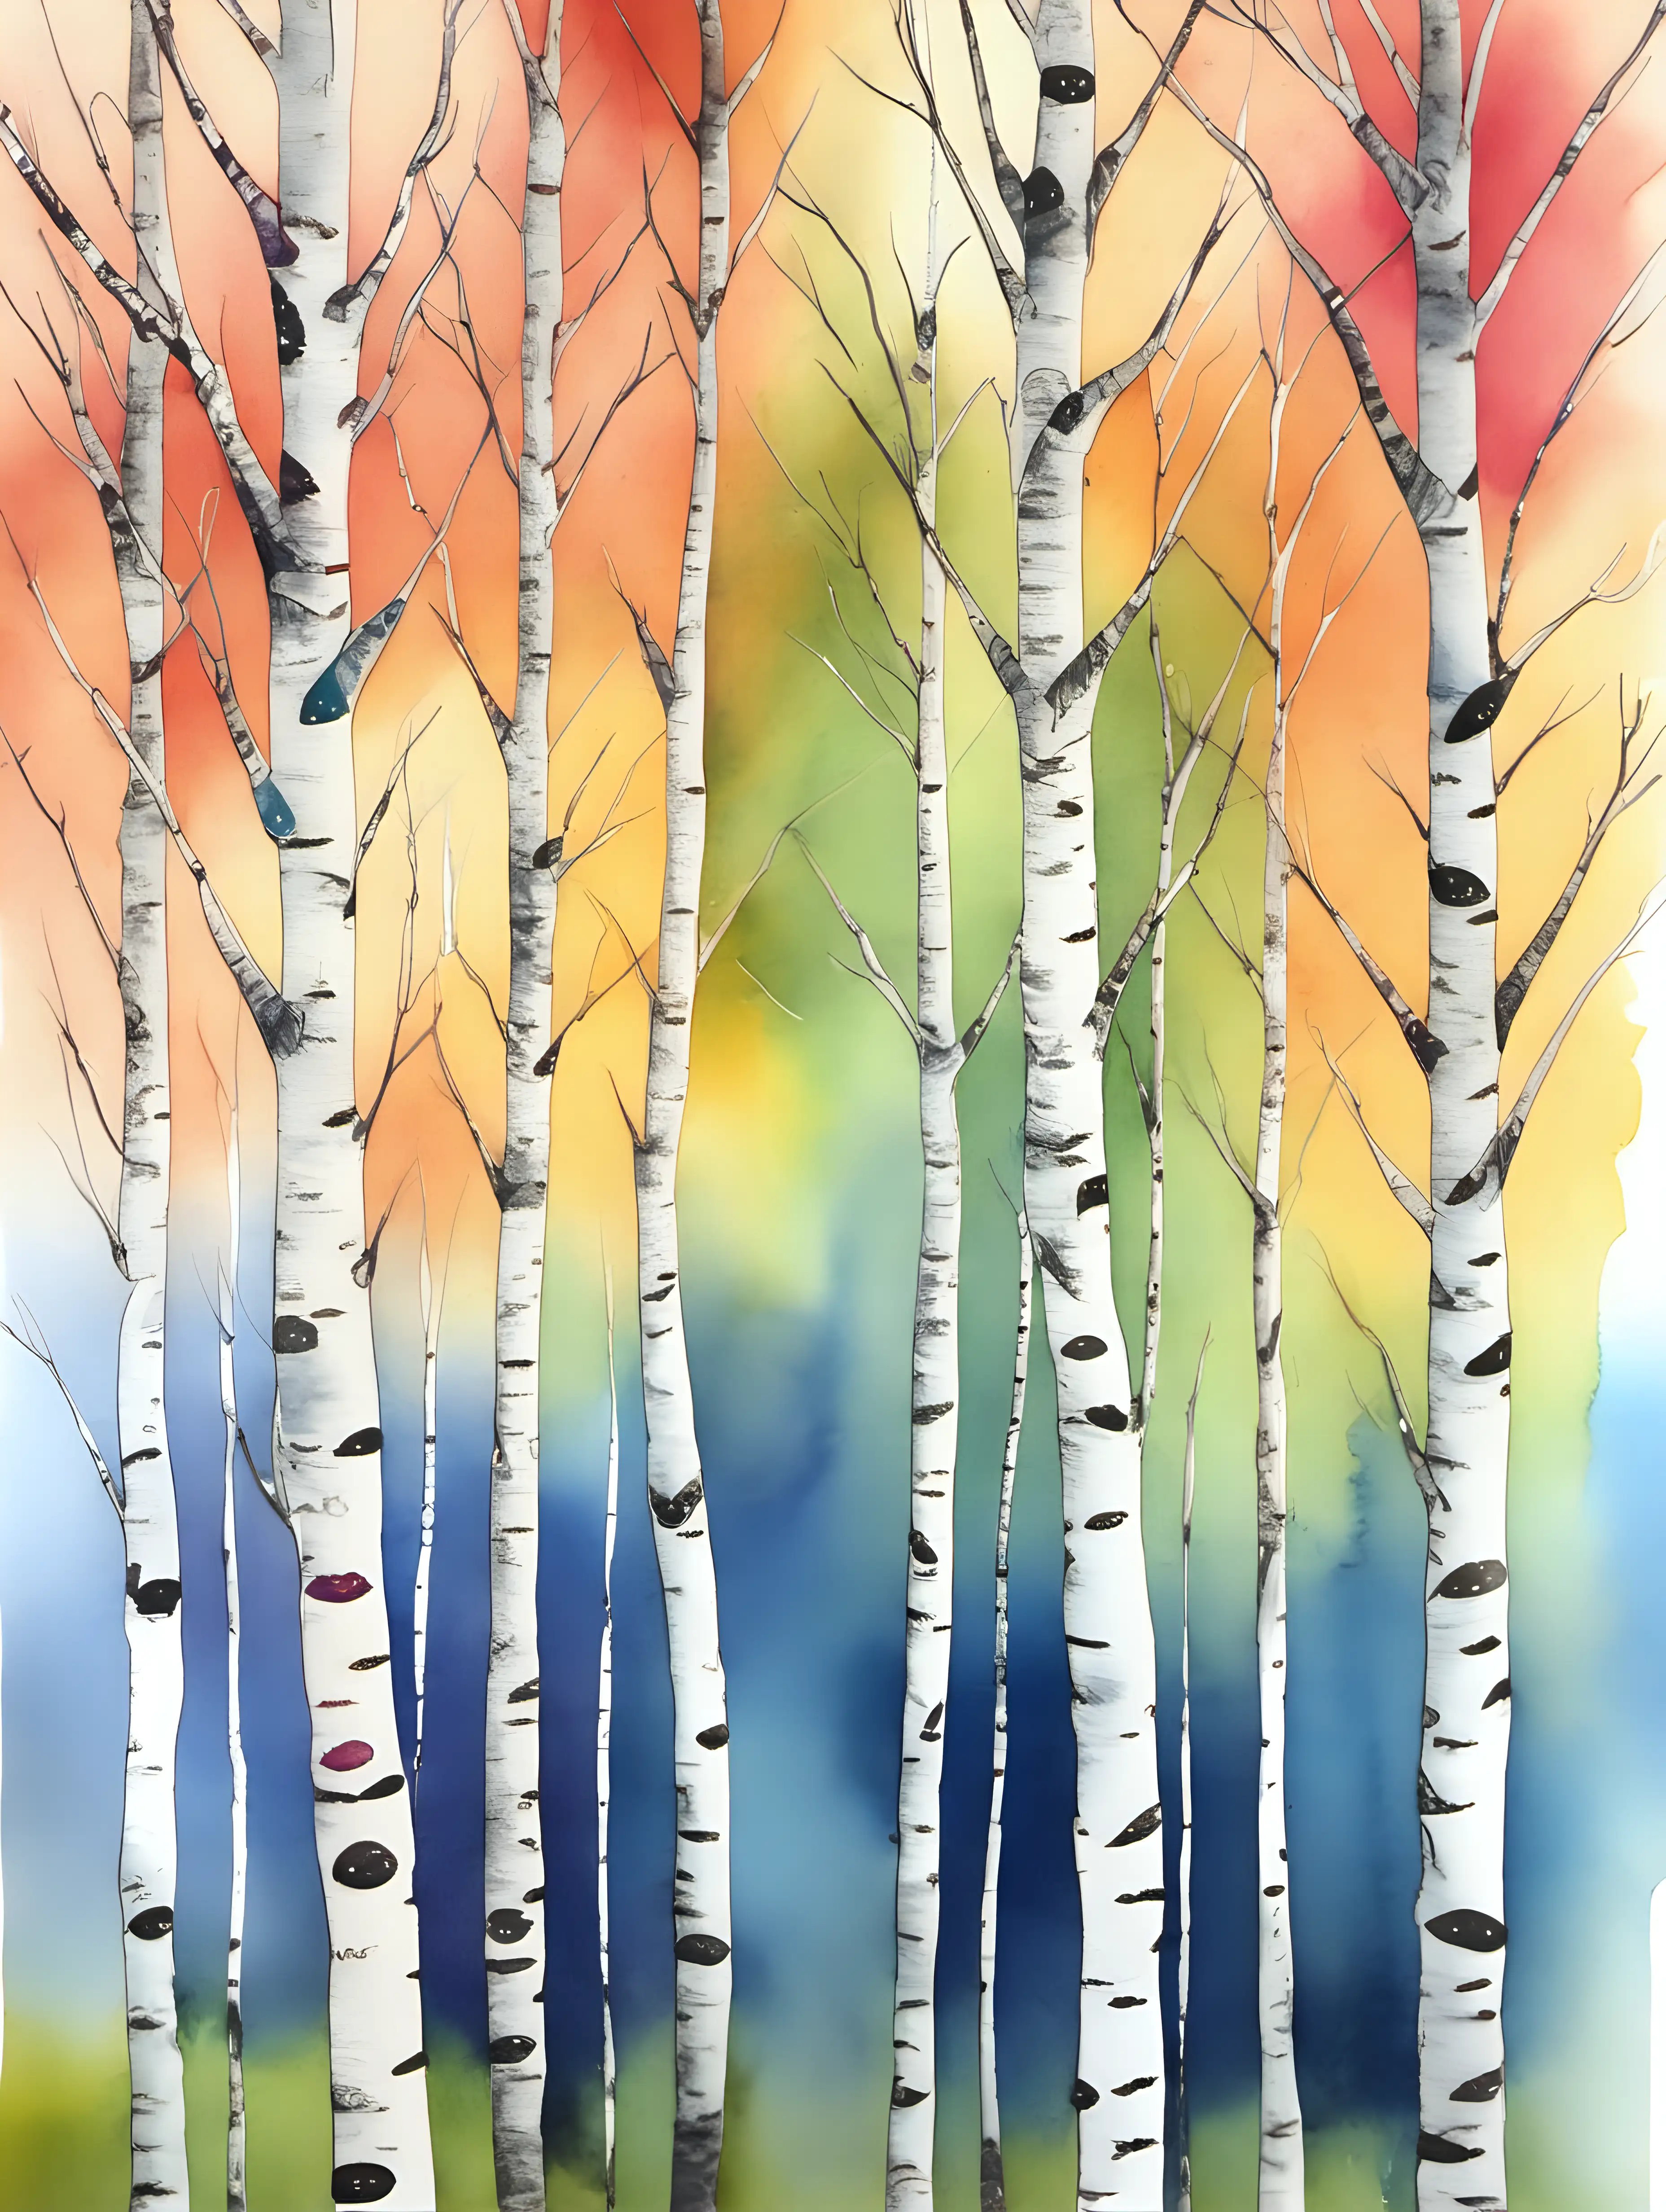 Vibrant Watercolor Birch Trees Painting Serene Nature Artwork